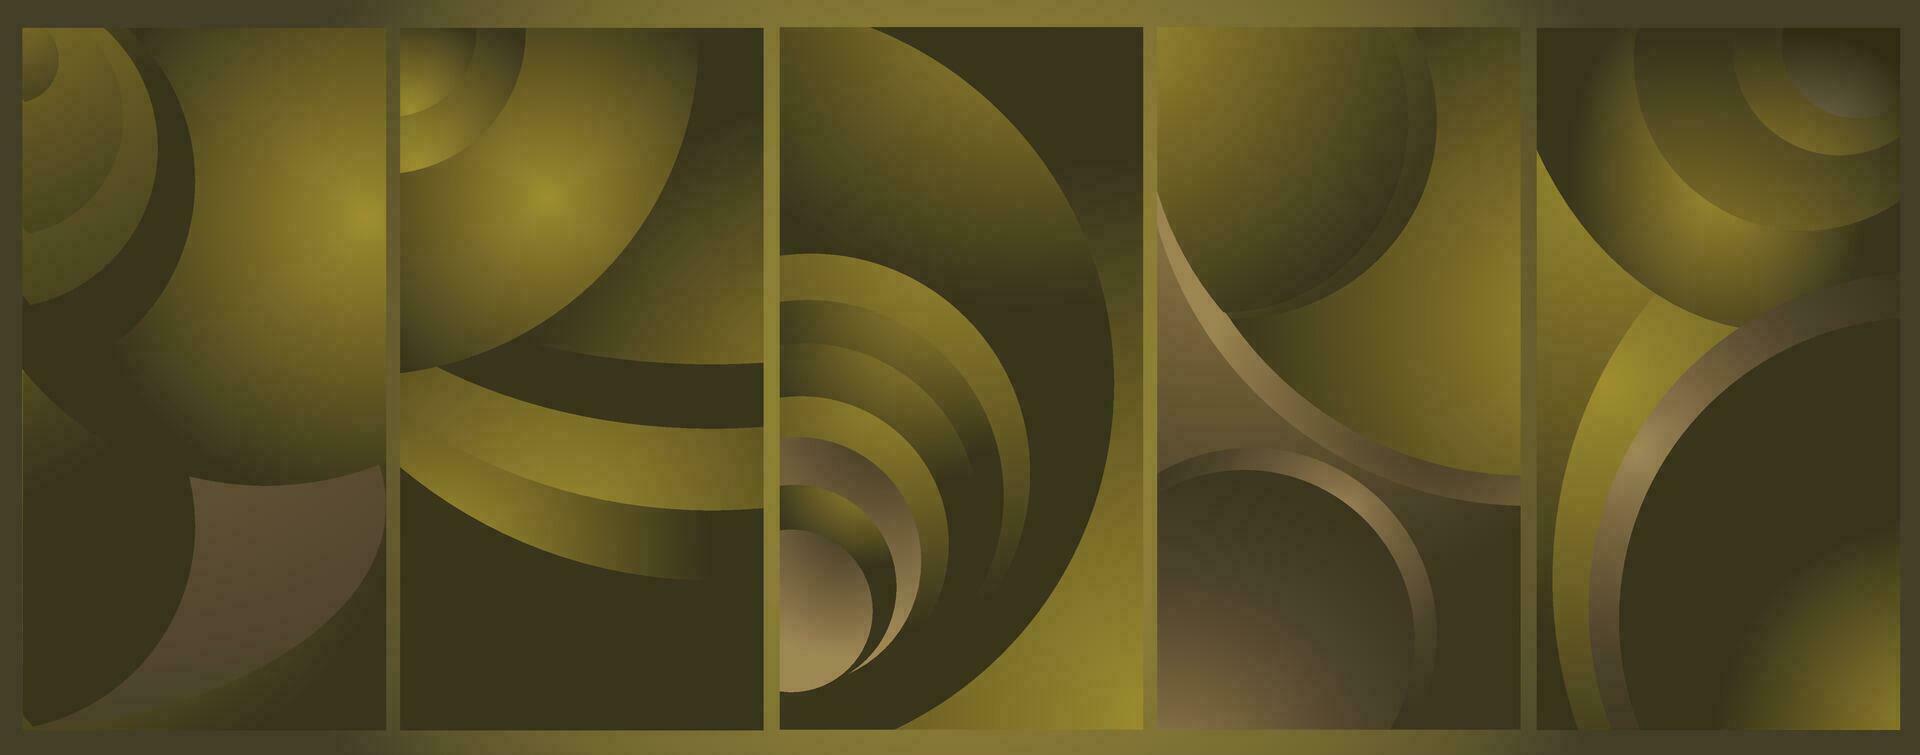 Circular haze abstract background with elegant theme vector